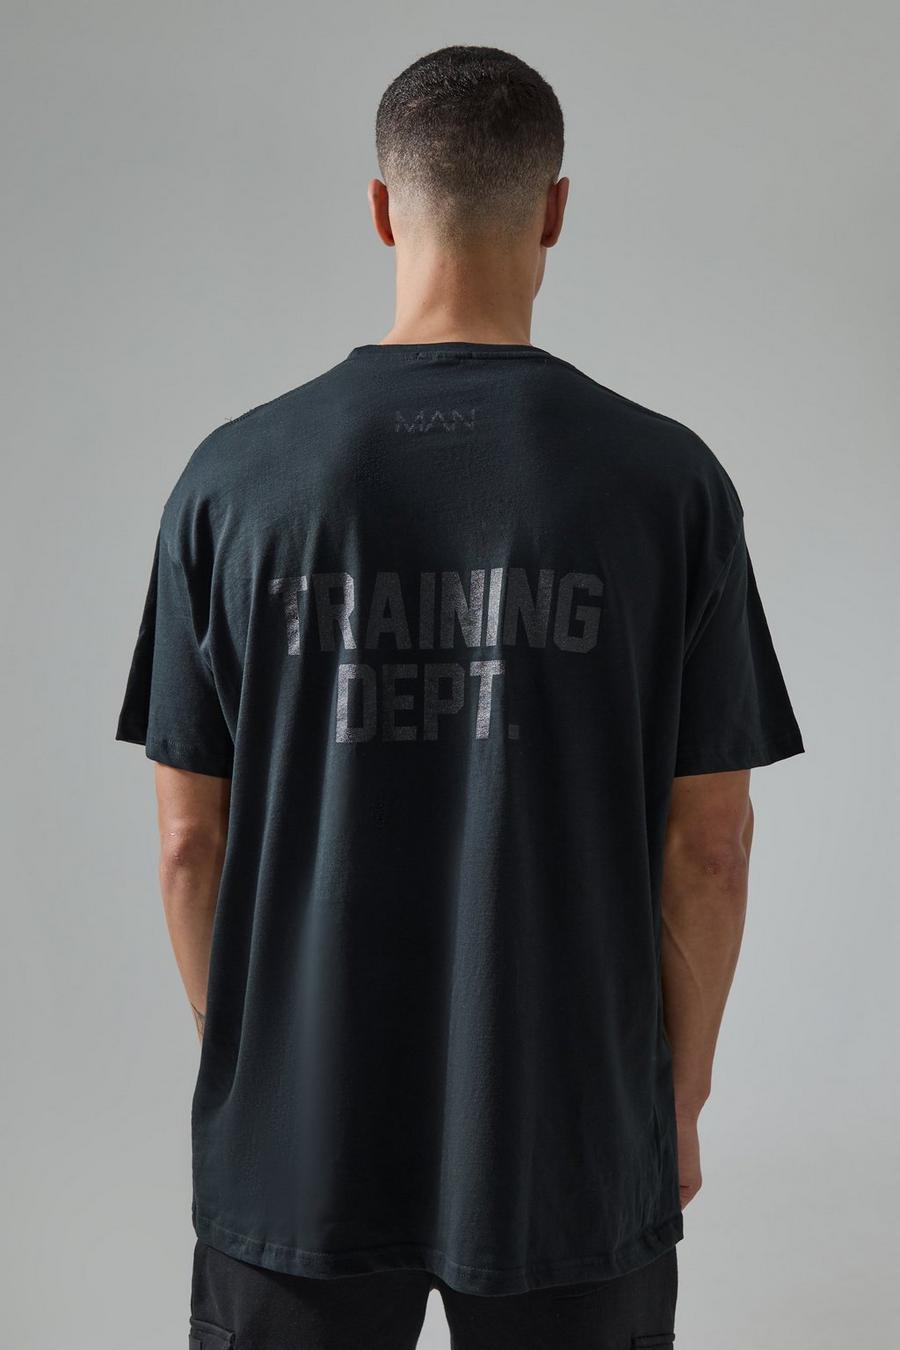 Black Active Training Dept Oversize t-shirt